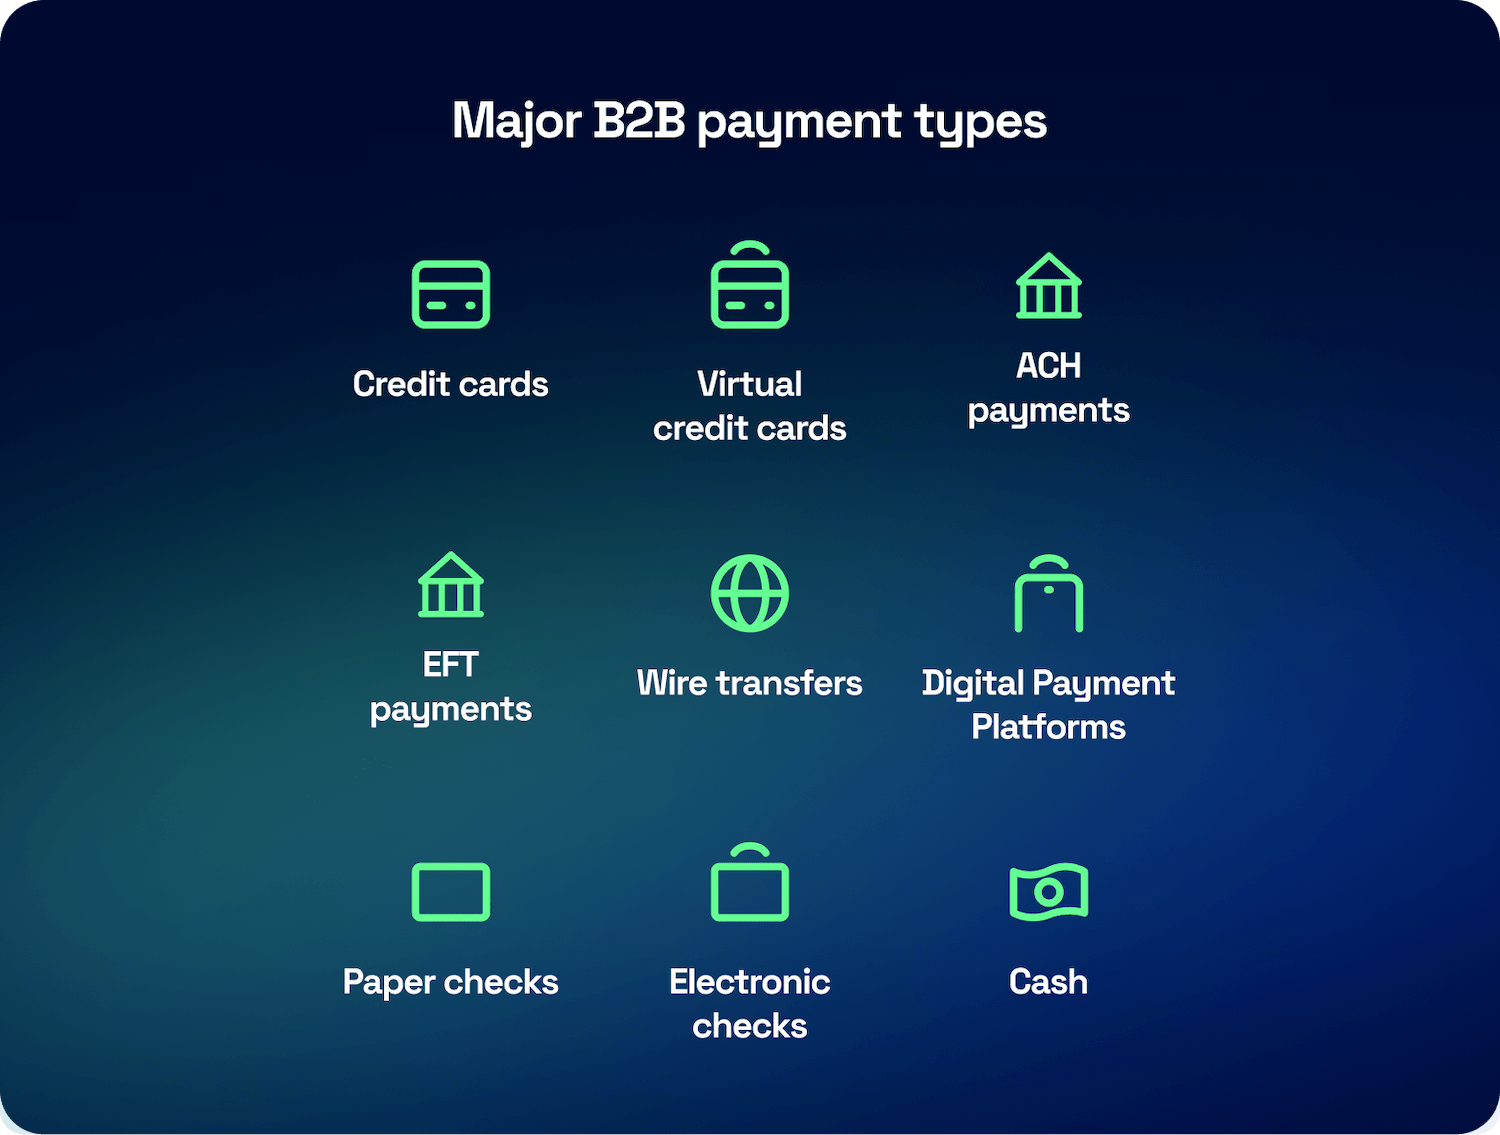 Major b2b payment types: credit cards, virtual CCs, ACH, EFT, wire, payment platforms, paper checks, echecks, cash